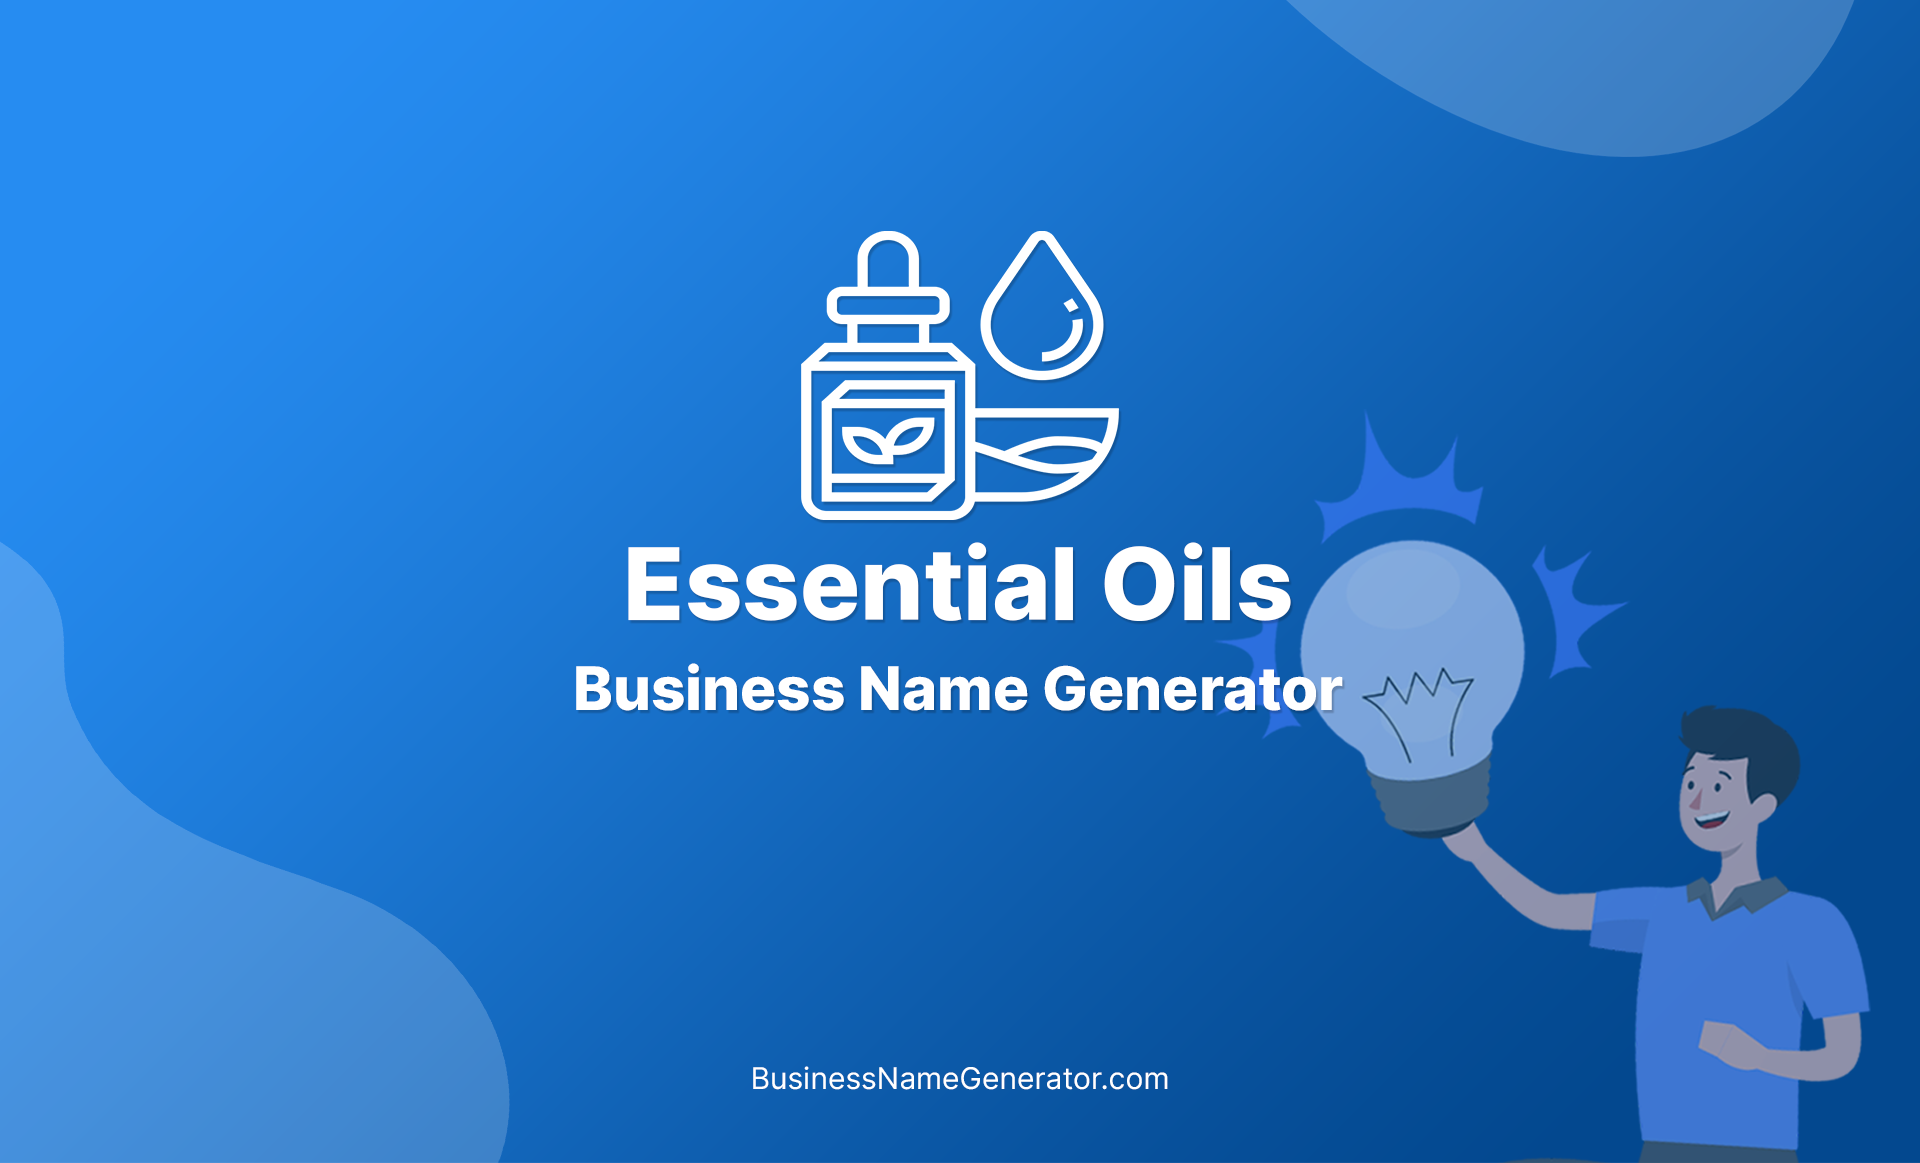 Essential Oils Business Name Generator